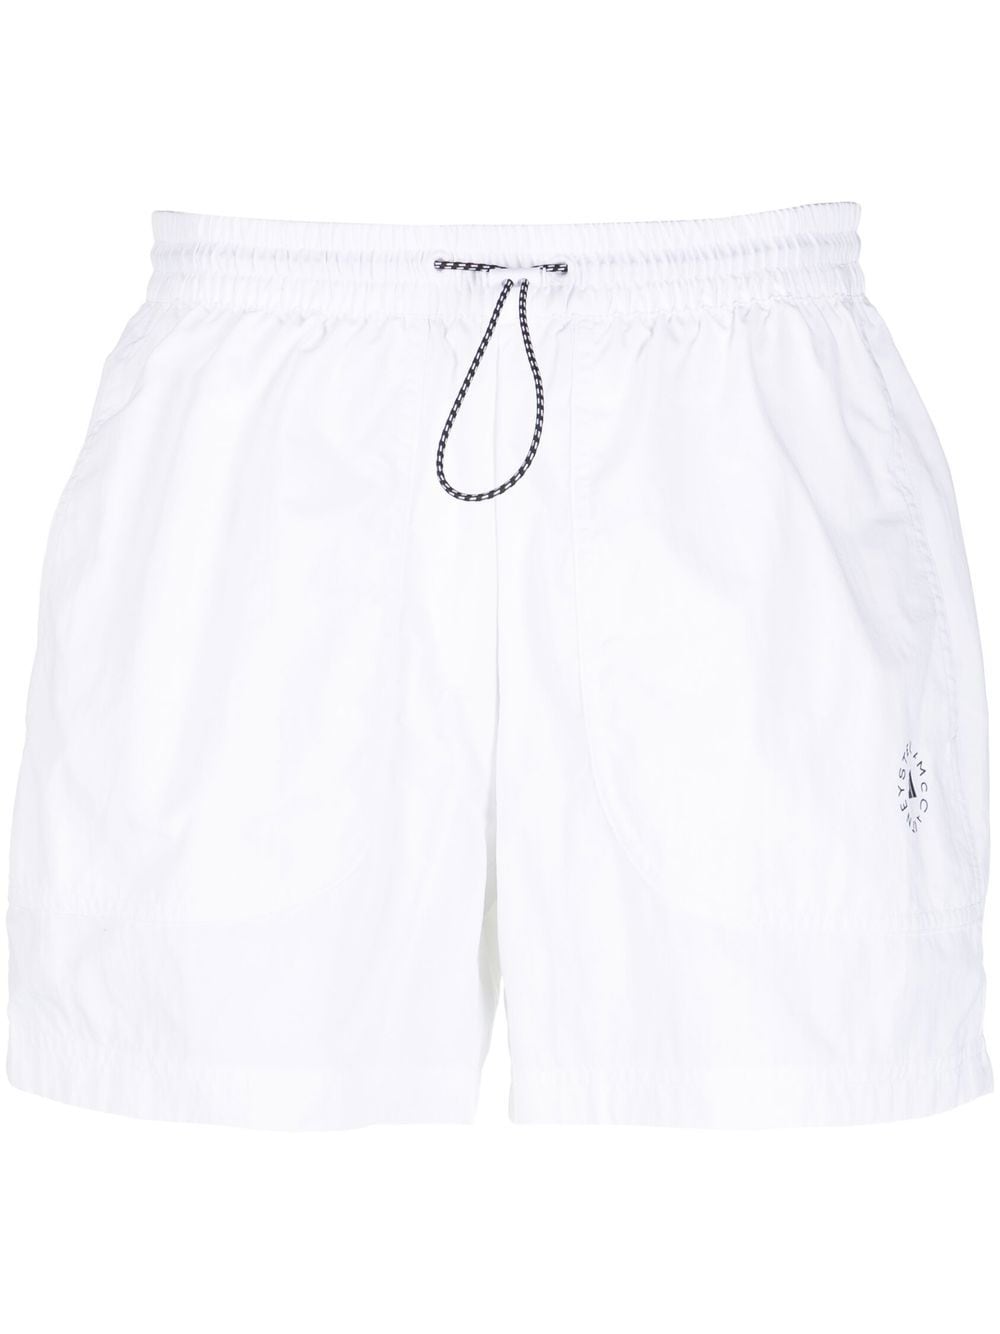 adidas by Stella McCartney TruePace running shorts - White